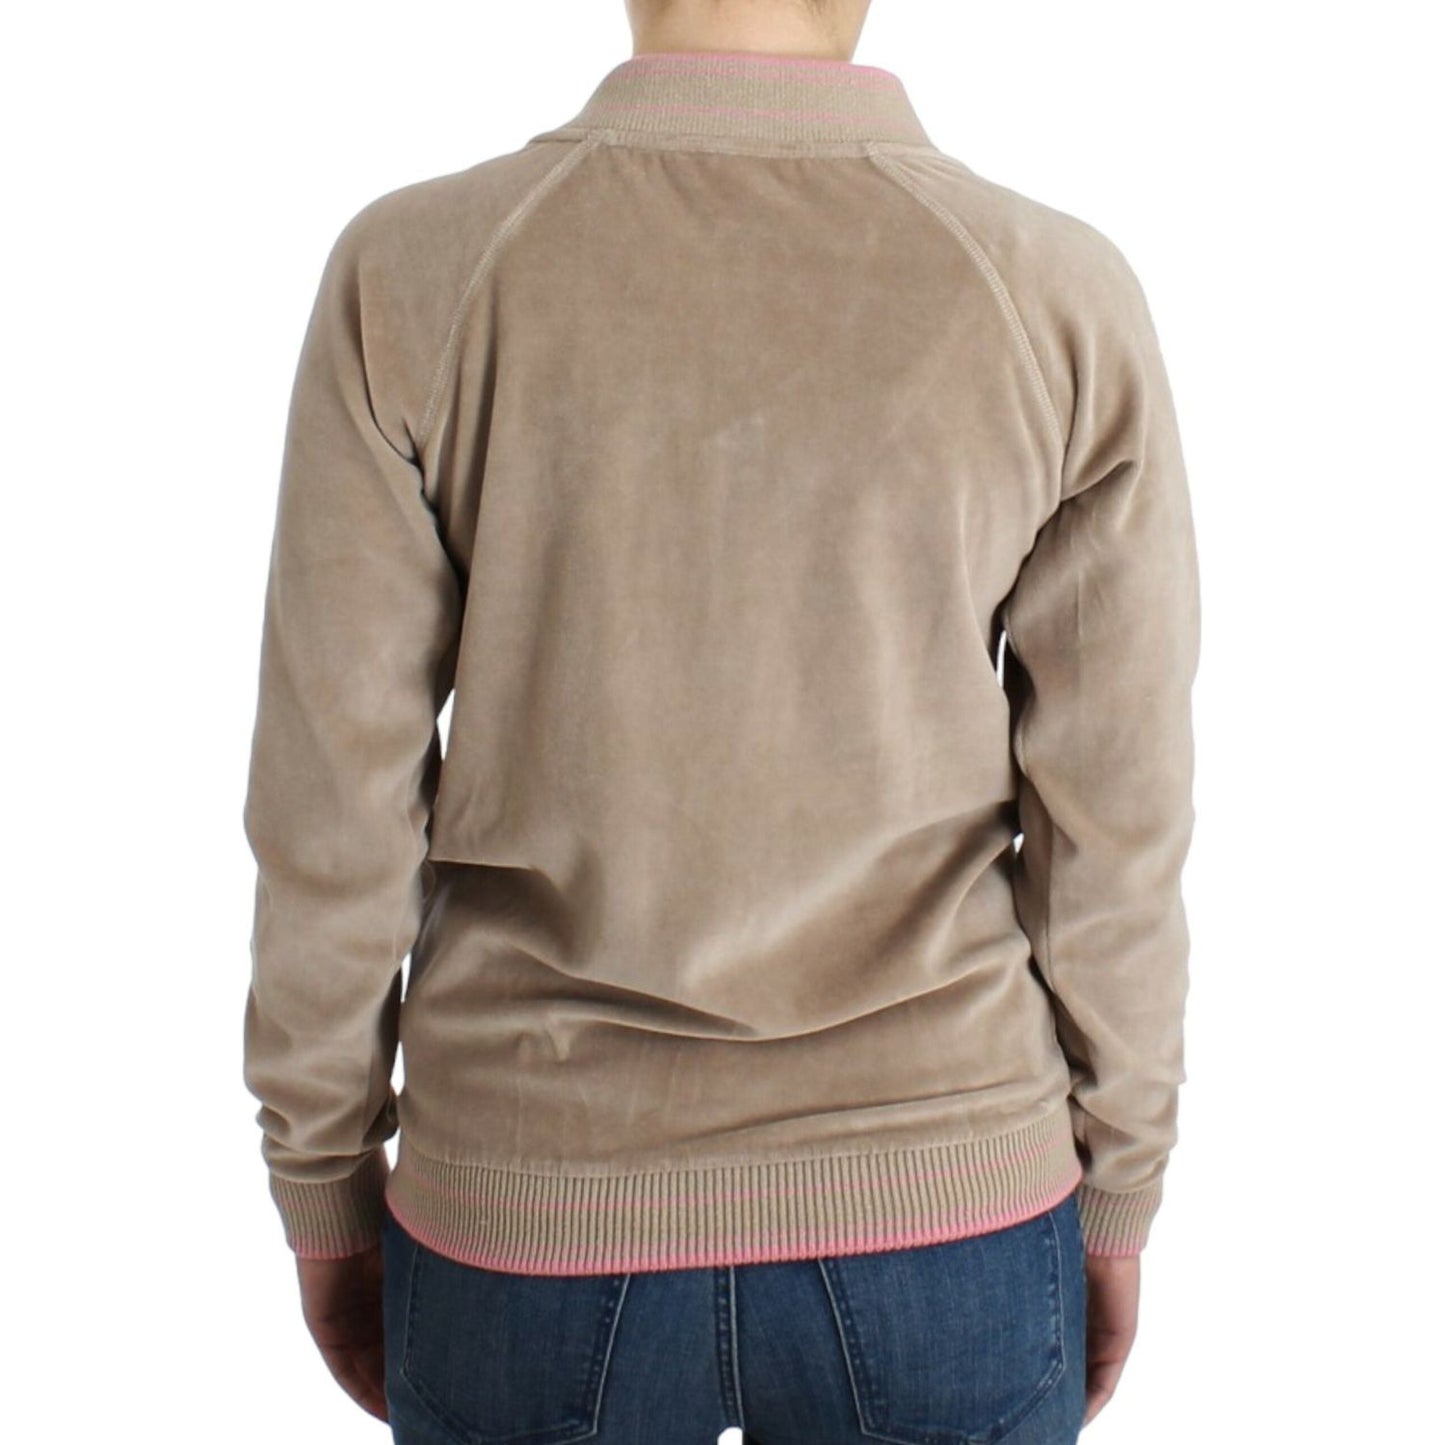 Cavalli Beige Zip Cardigan with Gold Tone Accents beige-velvet-zipup-sweater 9105-beige-velvet-zipup-sweater-2-scaled-6f30ec5d-825.jpg